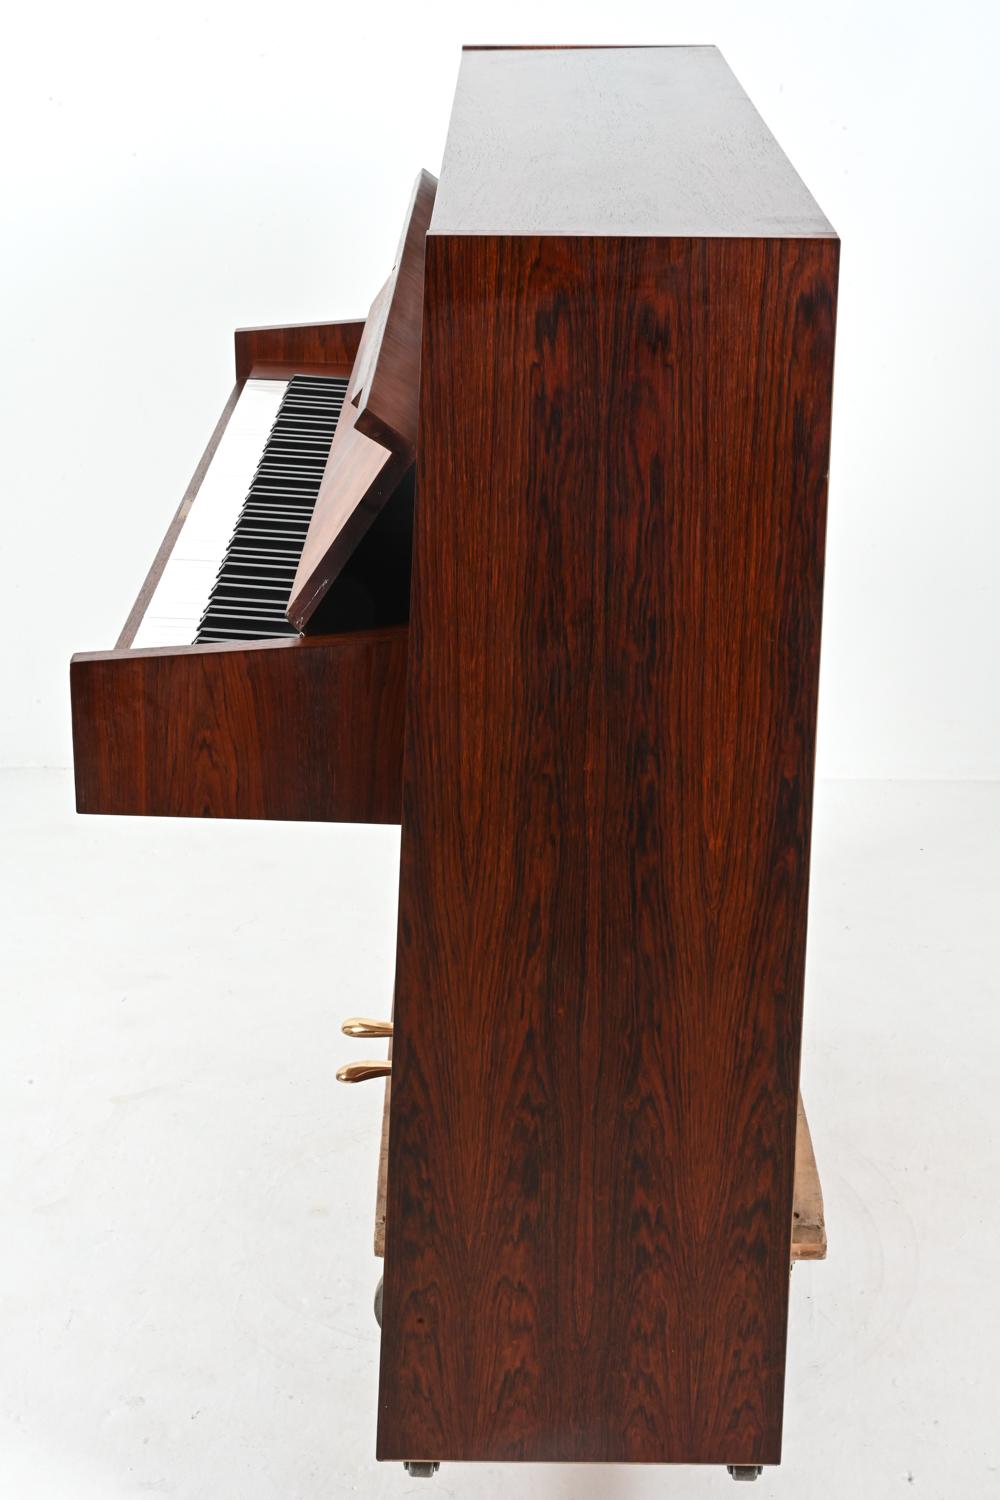 Very Rare Louis Zwicki 85-Key Upright Piano in Rosewood 8